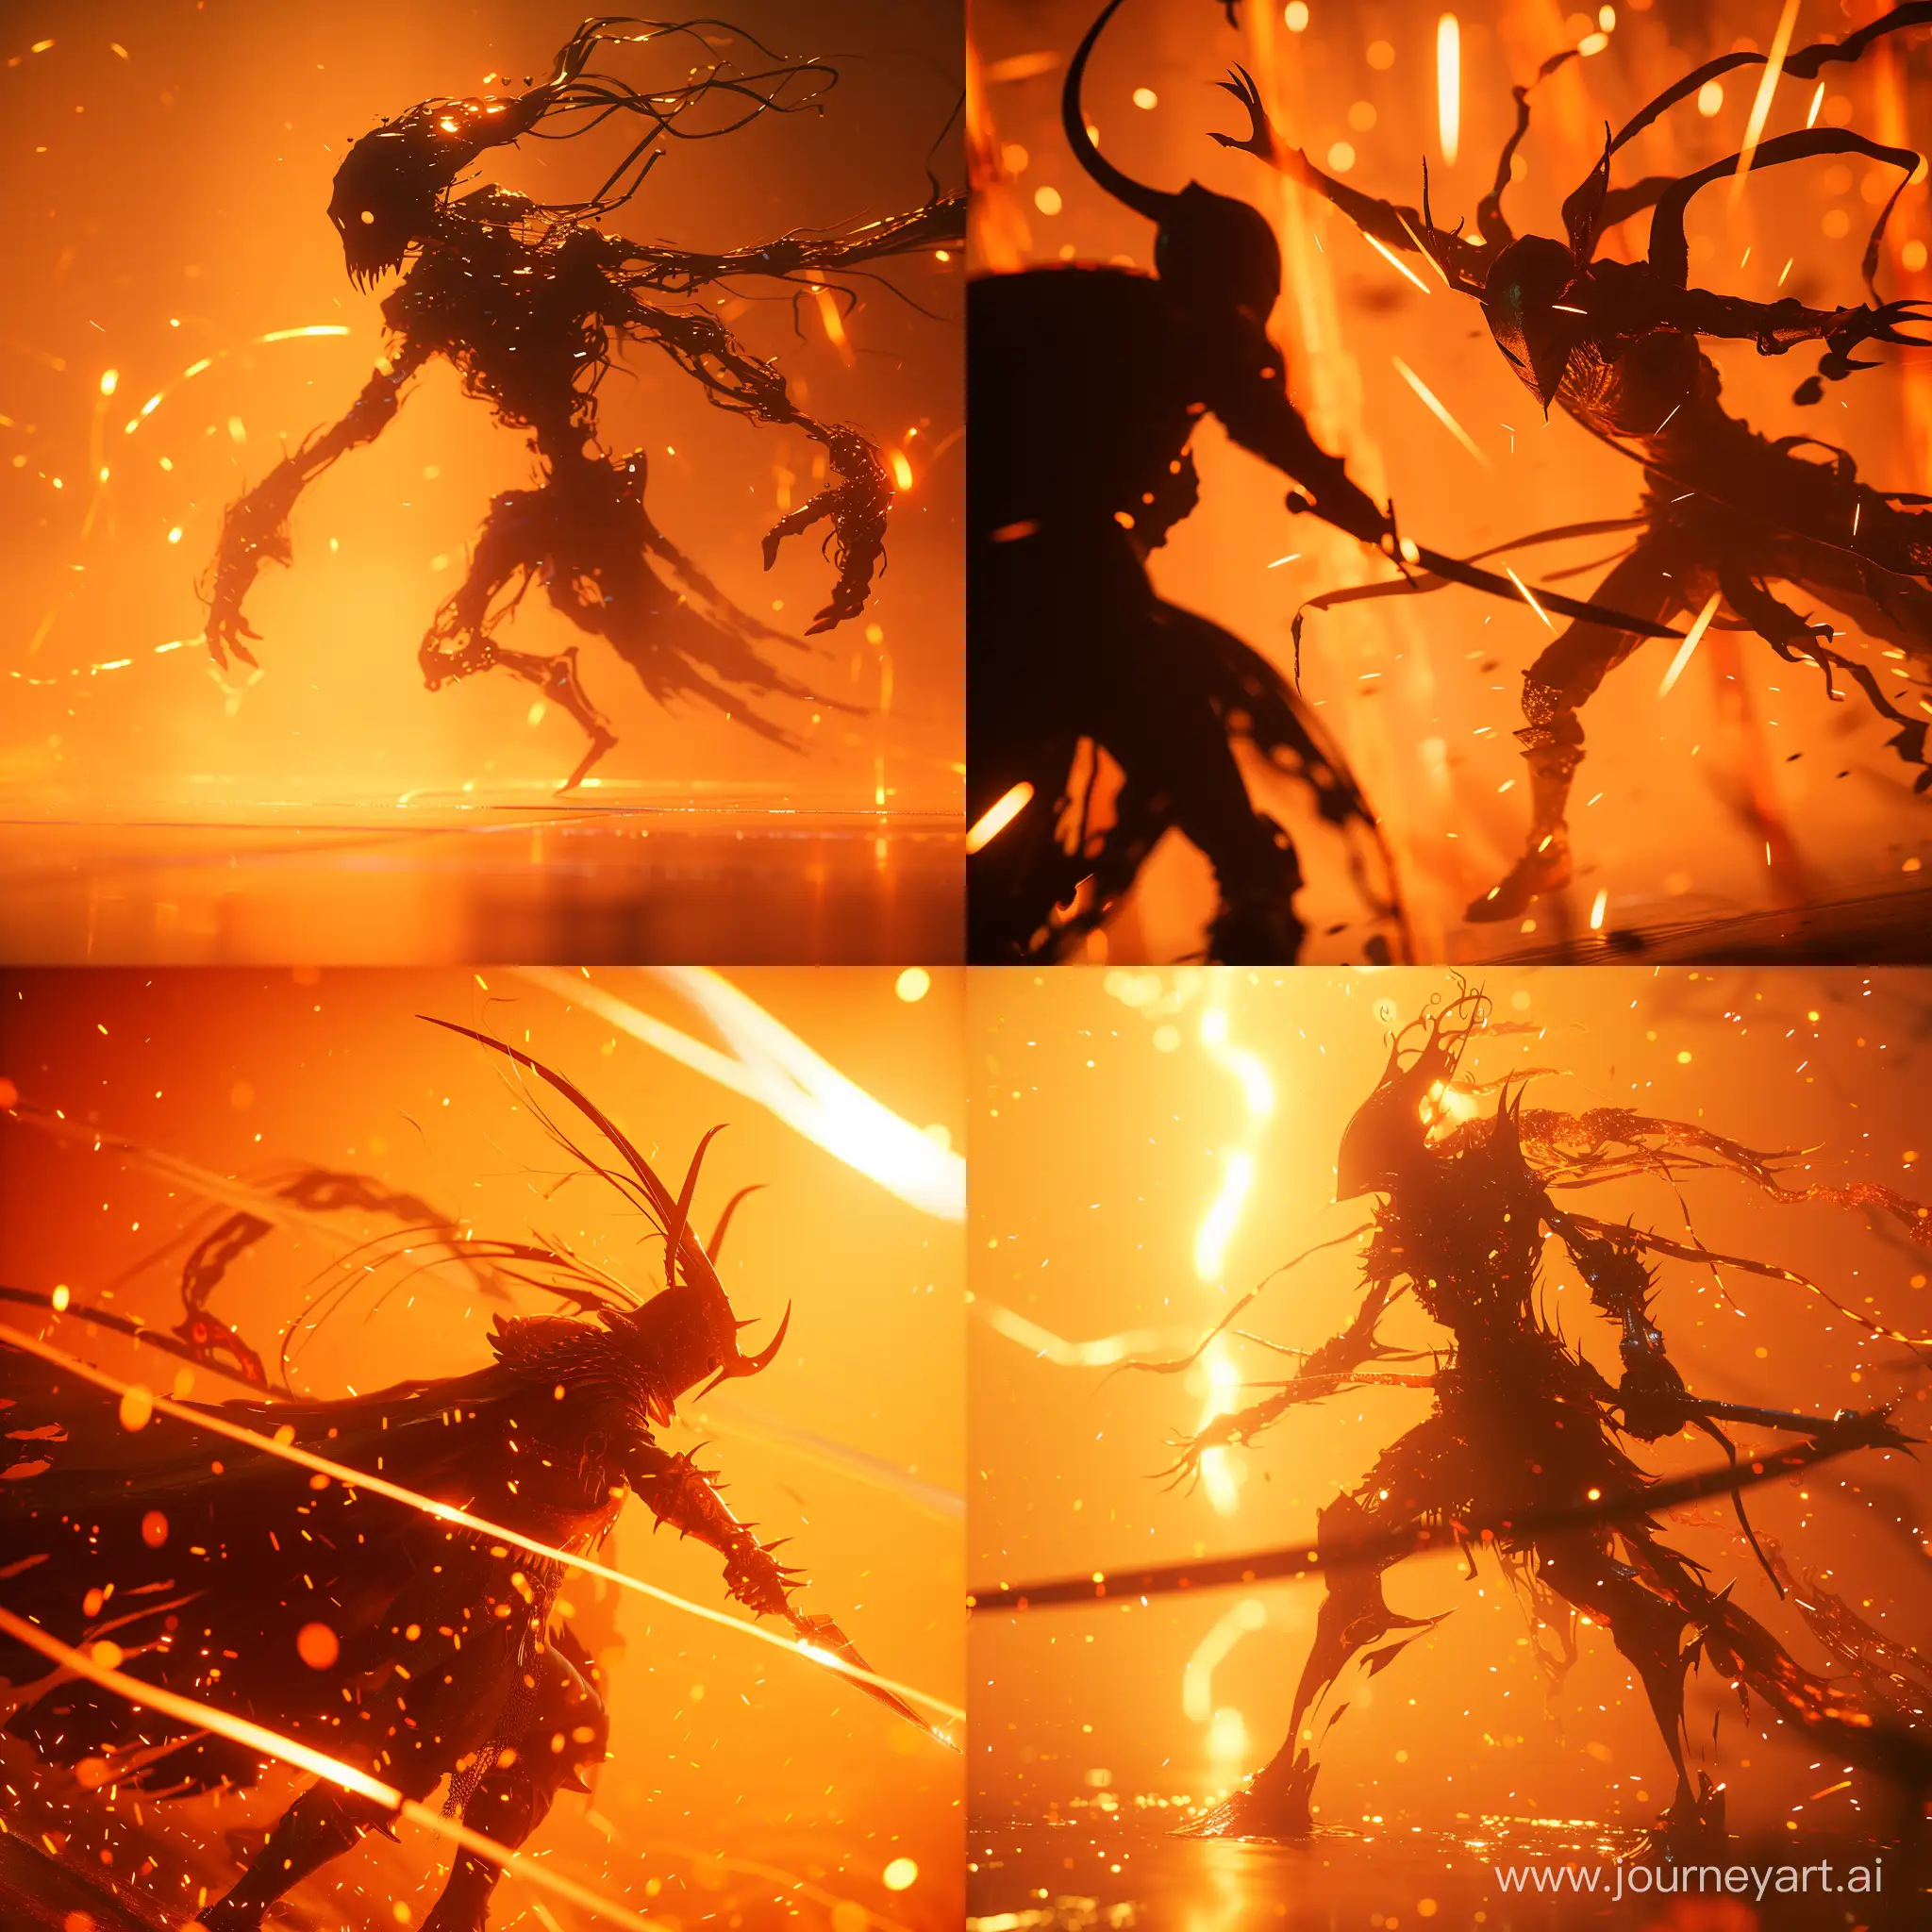 hollow knight boss fight, 4k render, cinematic light, orange background, motion blur, orange light